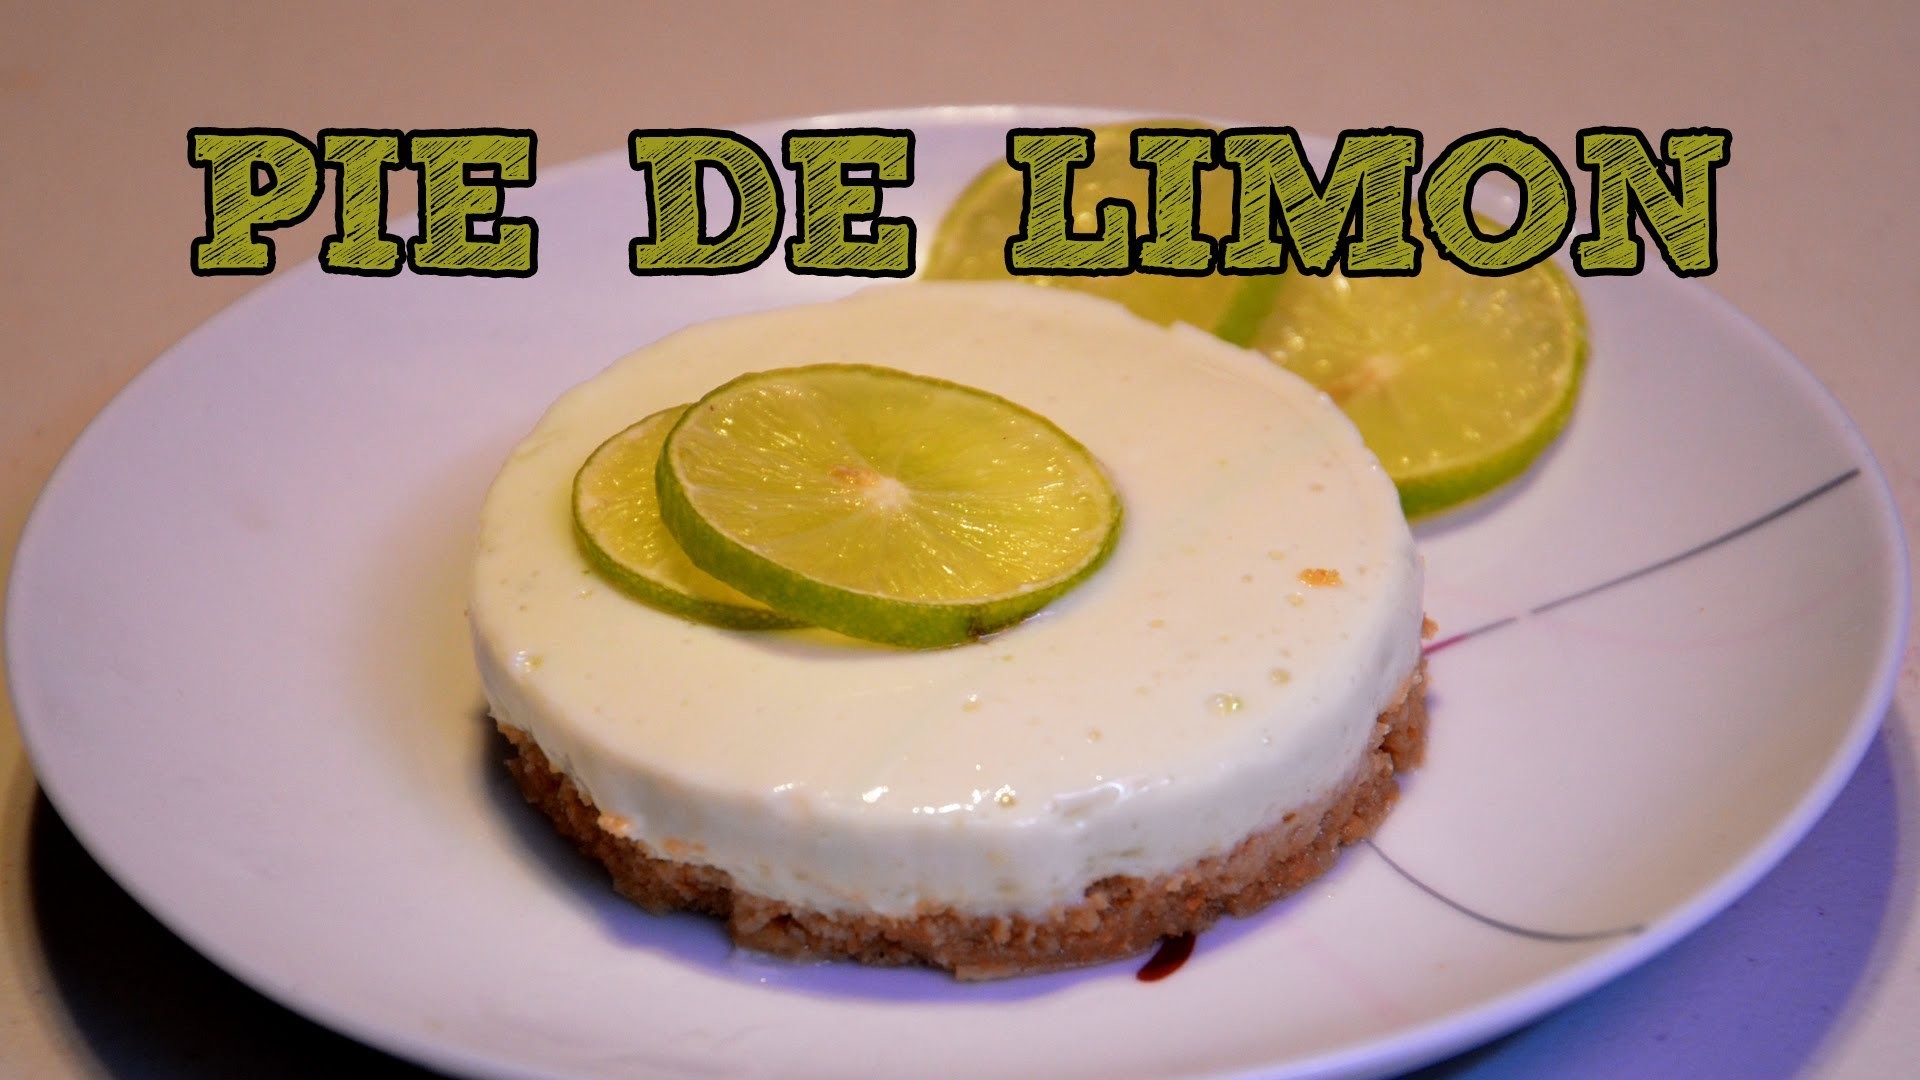 Pay de limon MUY FÁCIL SIN HORNO | Recetas de postres y cocina faciles | Pie de limón Fácil